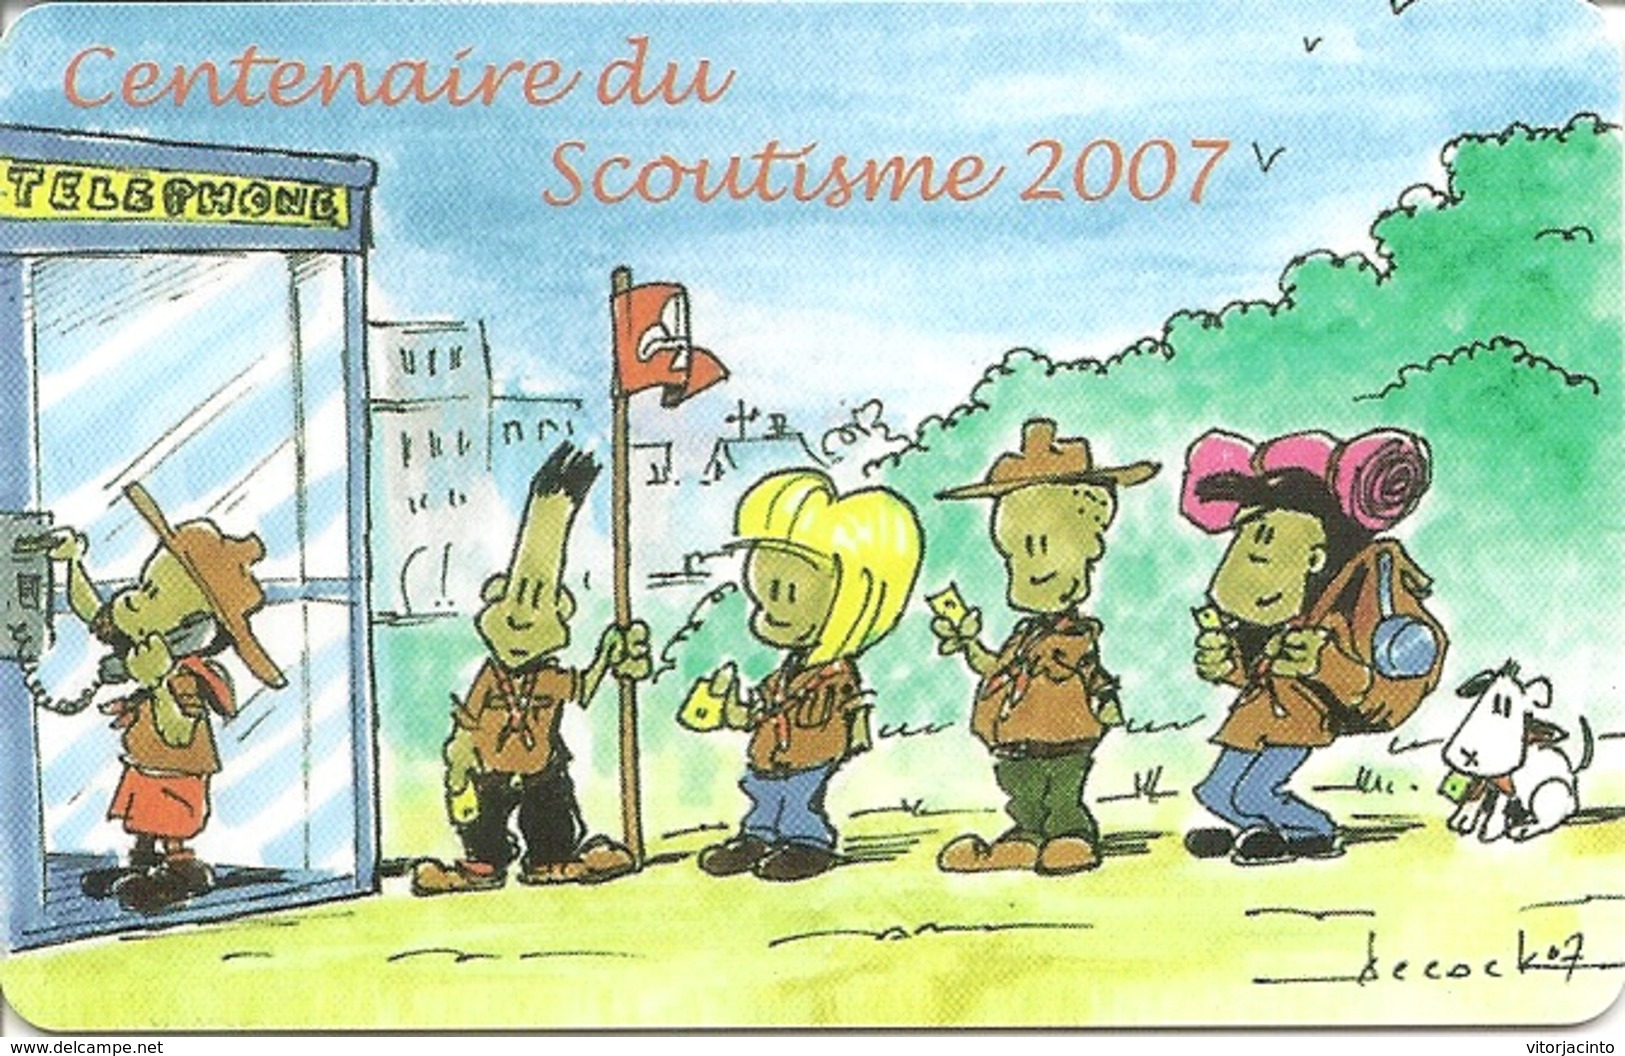 P&T Luxembourg - Telekaart - Centenaire Du Scoutisme 2007 - Lussemburgo